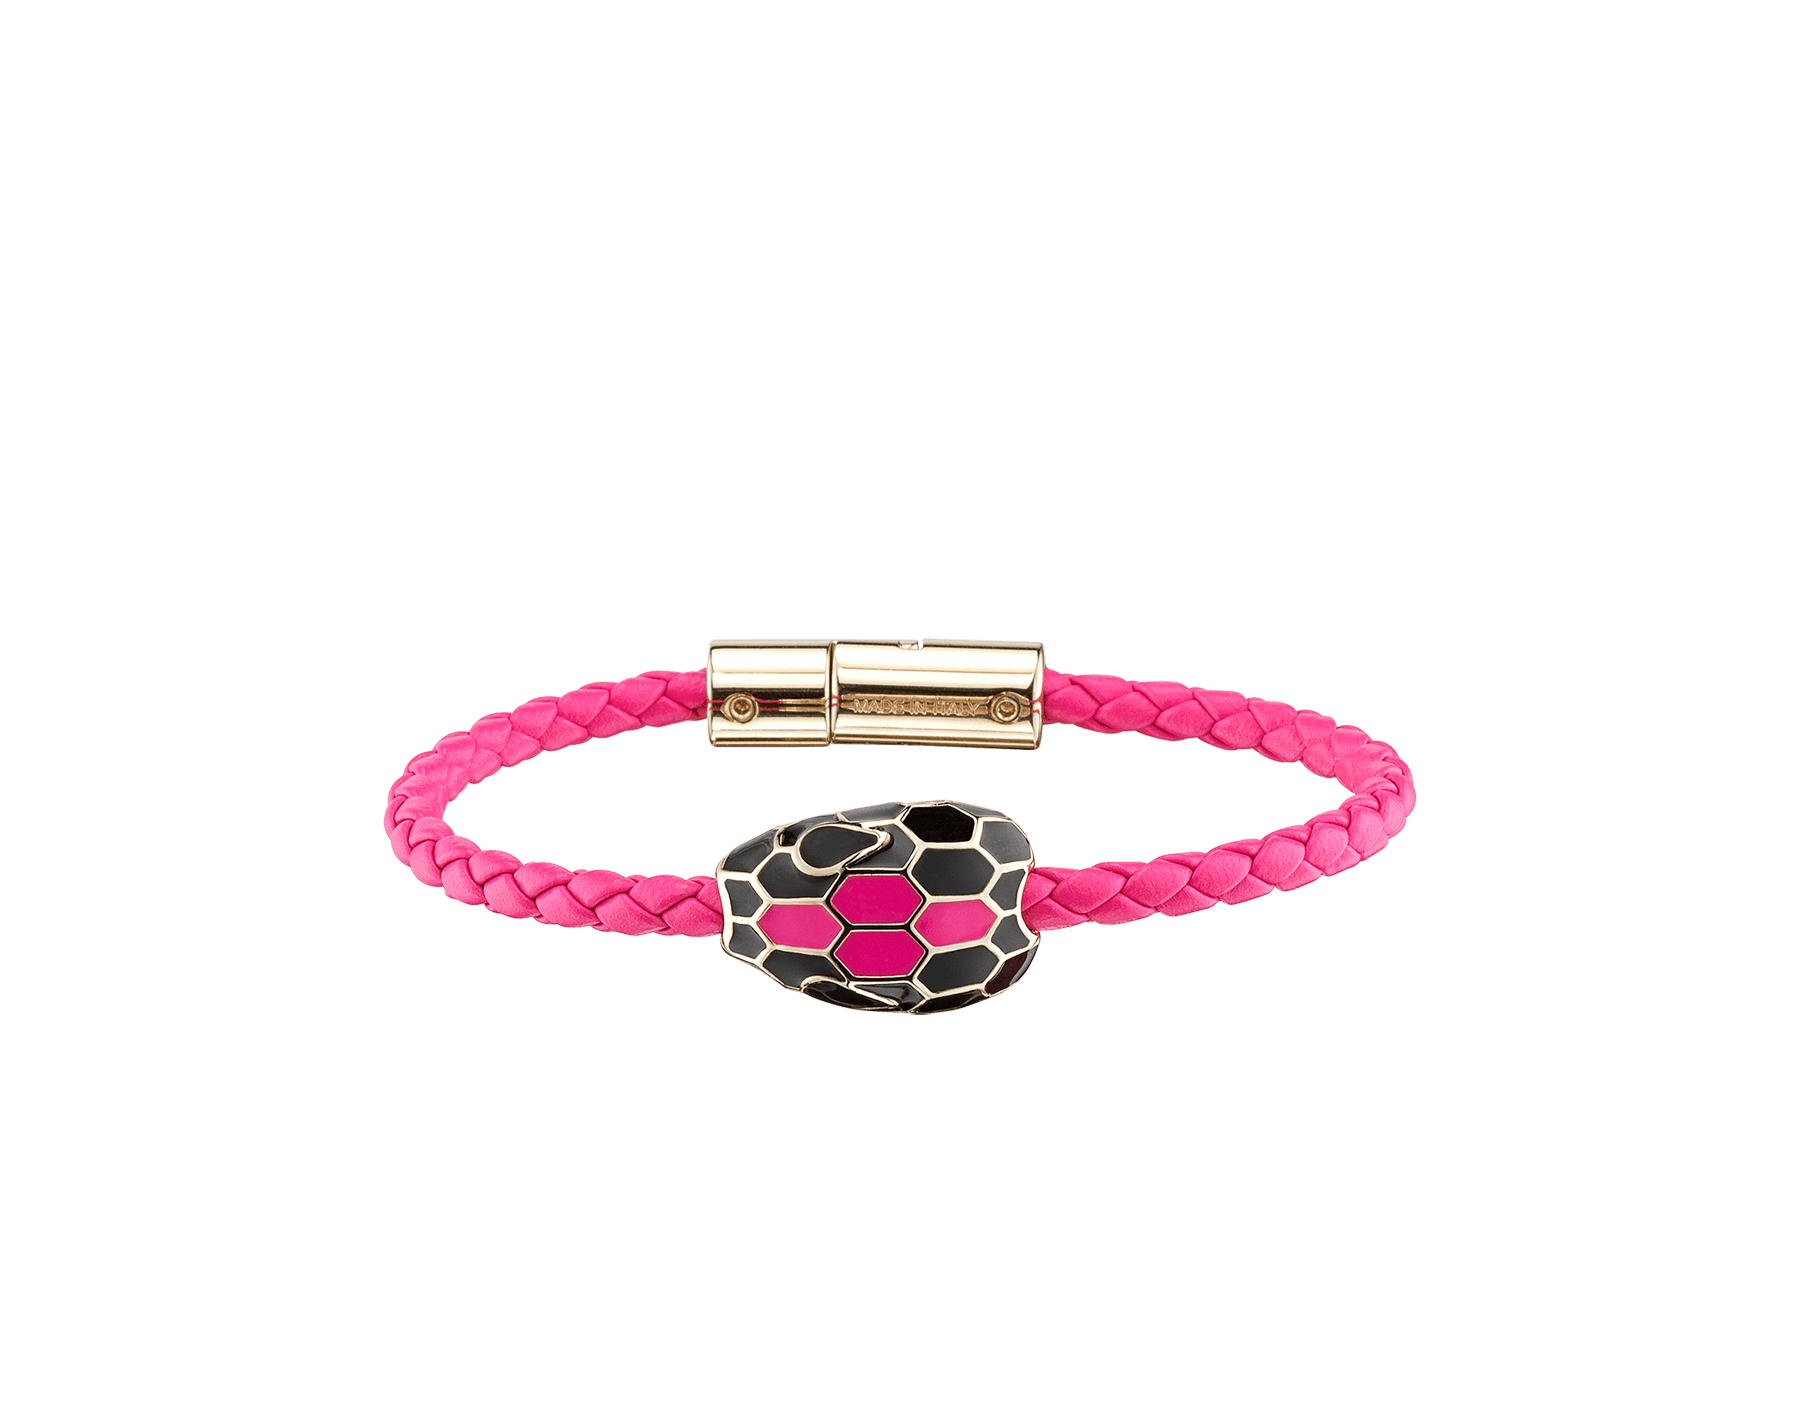 bulgari snake bracelet leather